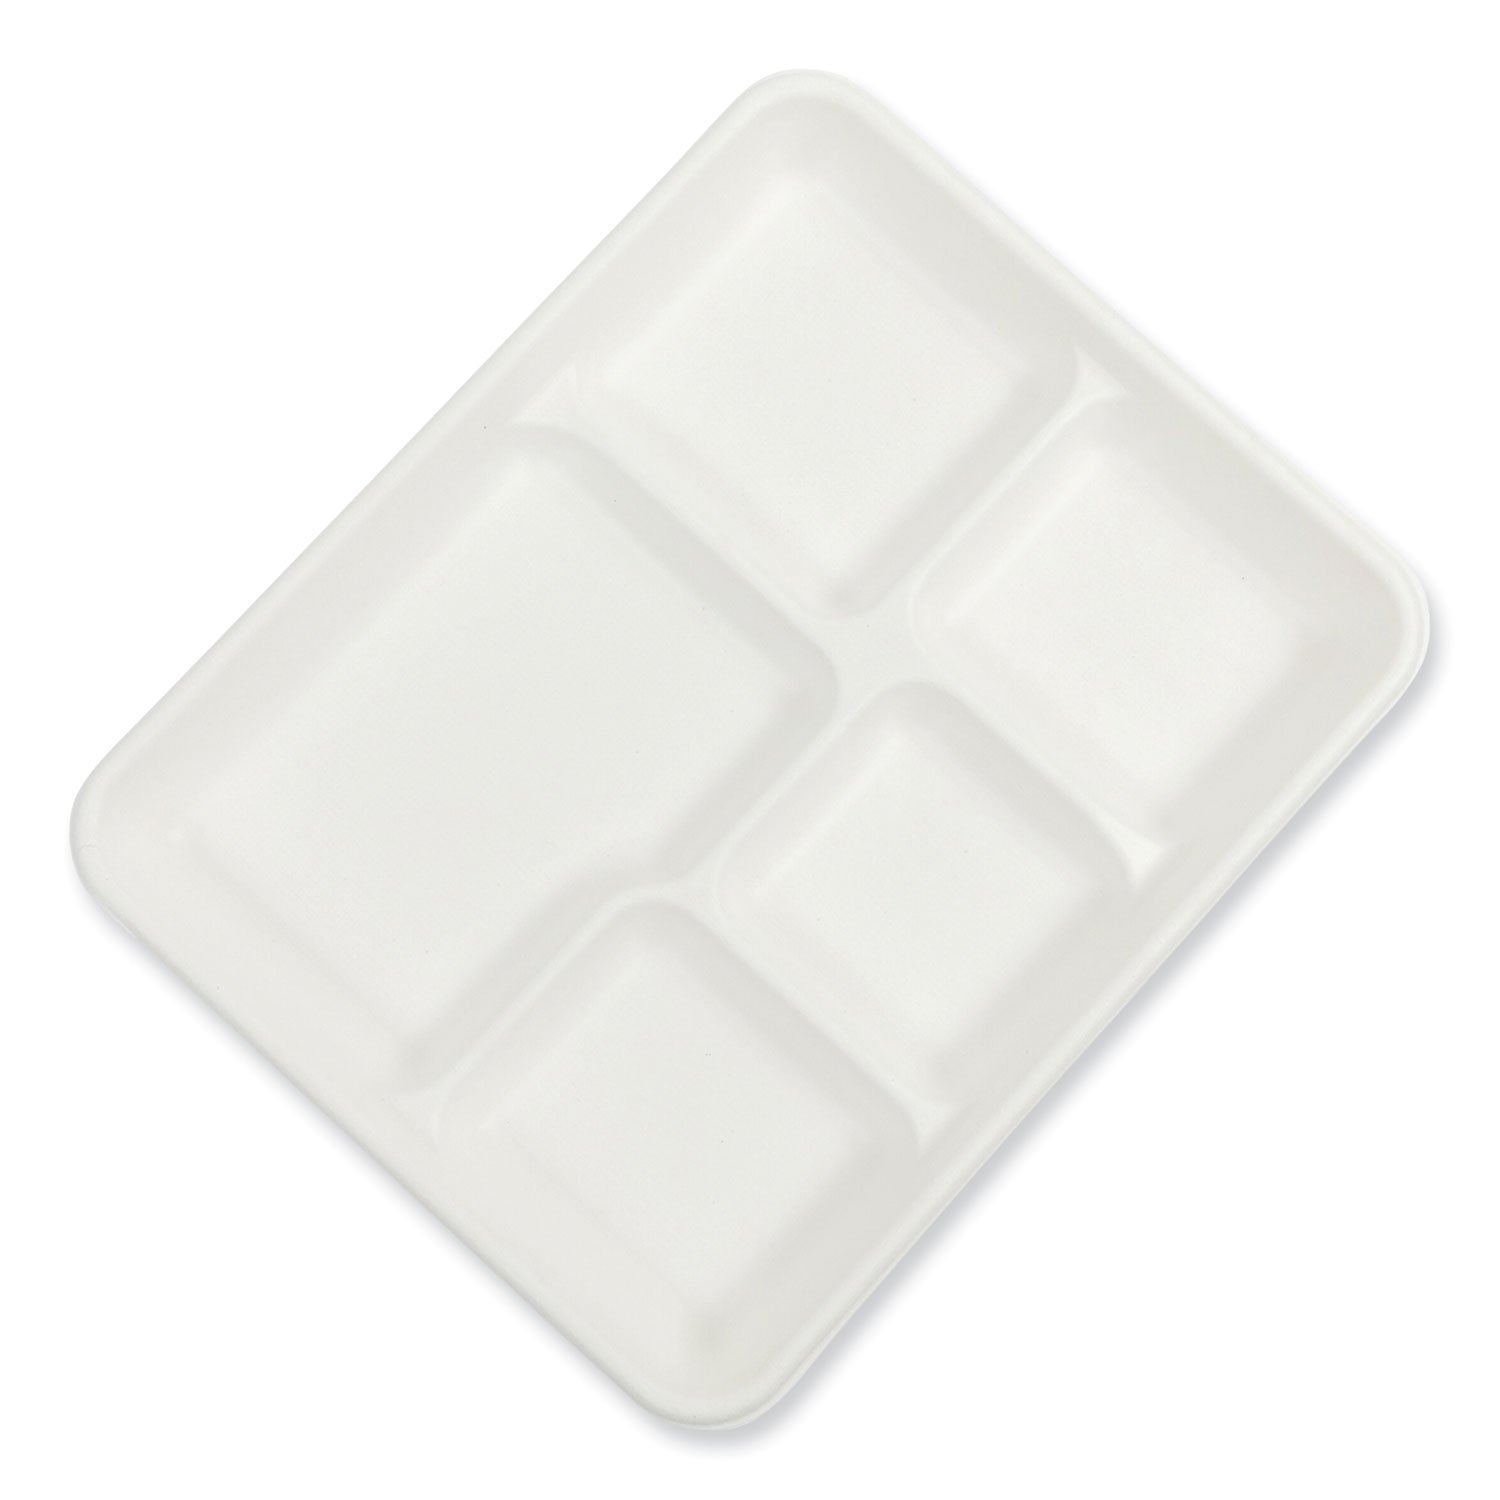 bagasse-pfas-free-food-tray-5-compartment-826-x-1023-x-094-white-bamboo-sugarcane-500-carton_rpptl15tnpfa - 1